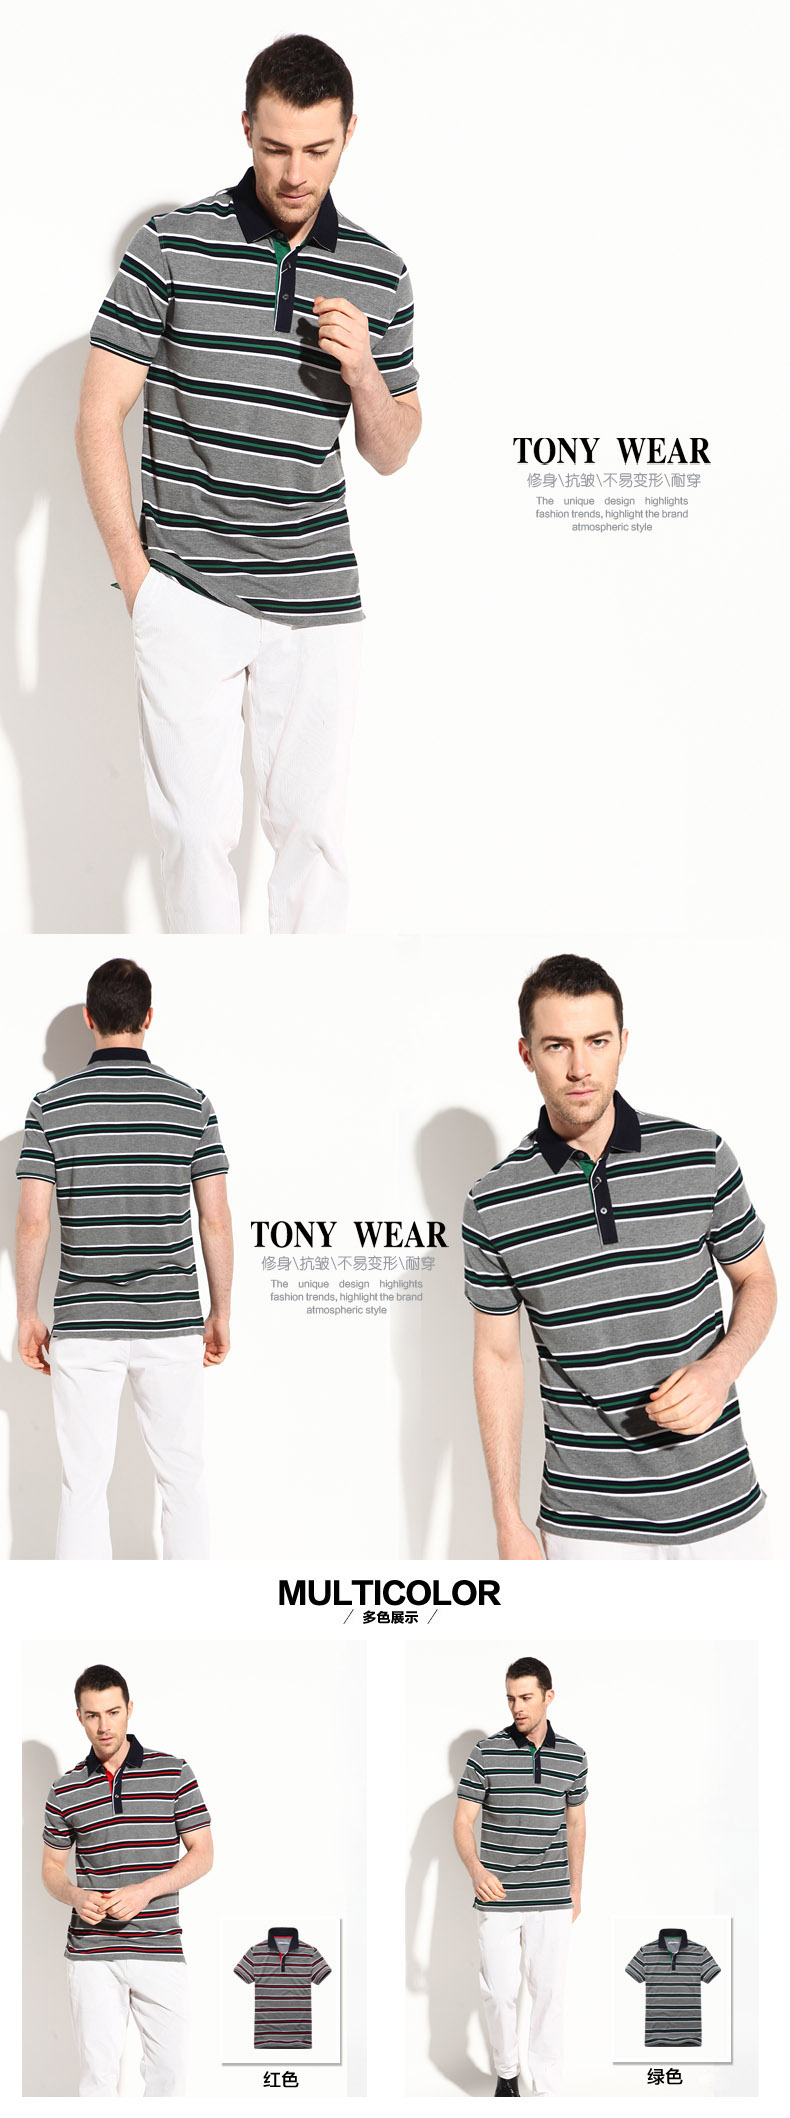 TONY WEAR汤尼威尔男士夏装 珠地棉宽条纹短袖POLO衫1112208200